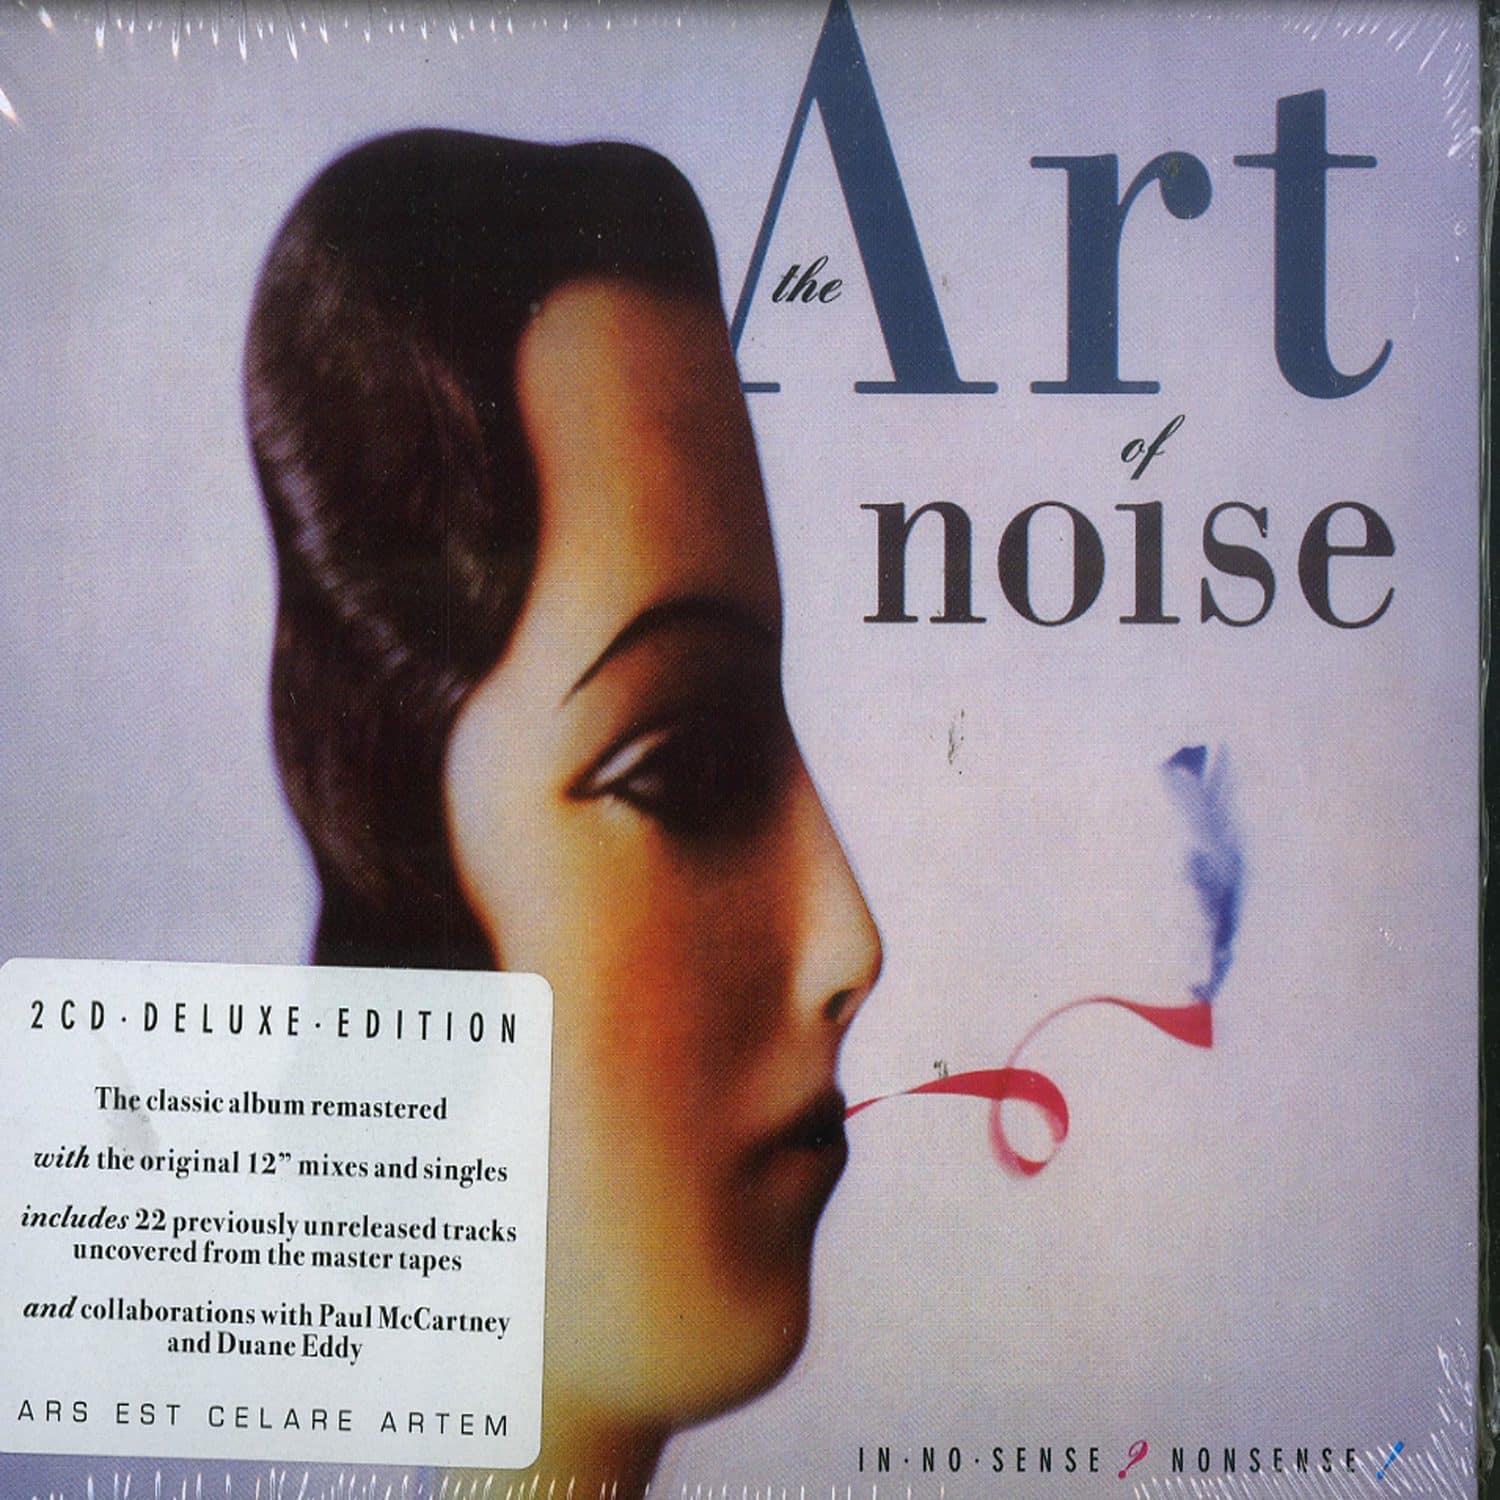 Art Of Noise - IN NO SENSE? NONSENSE! 